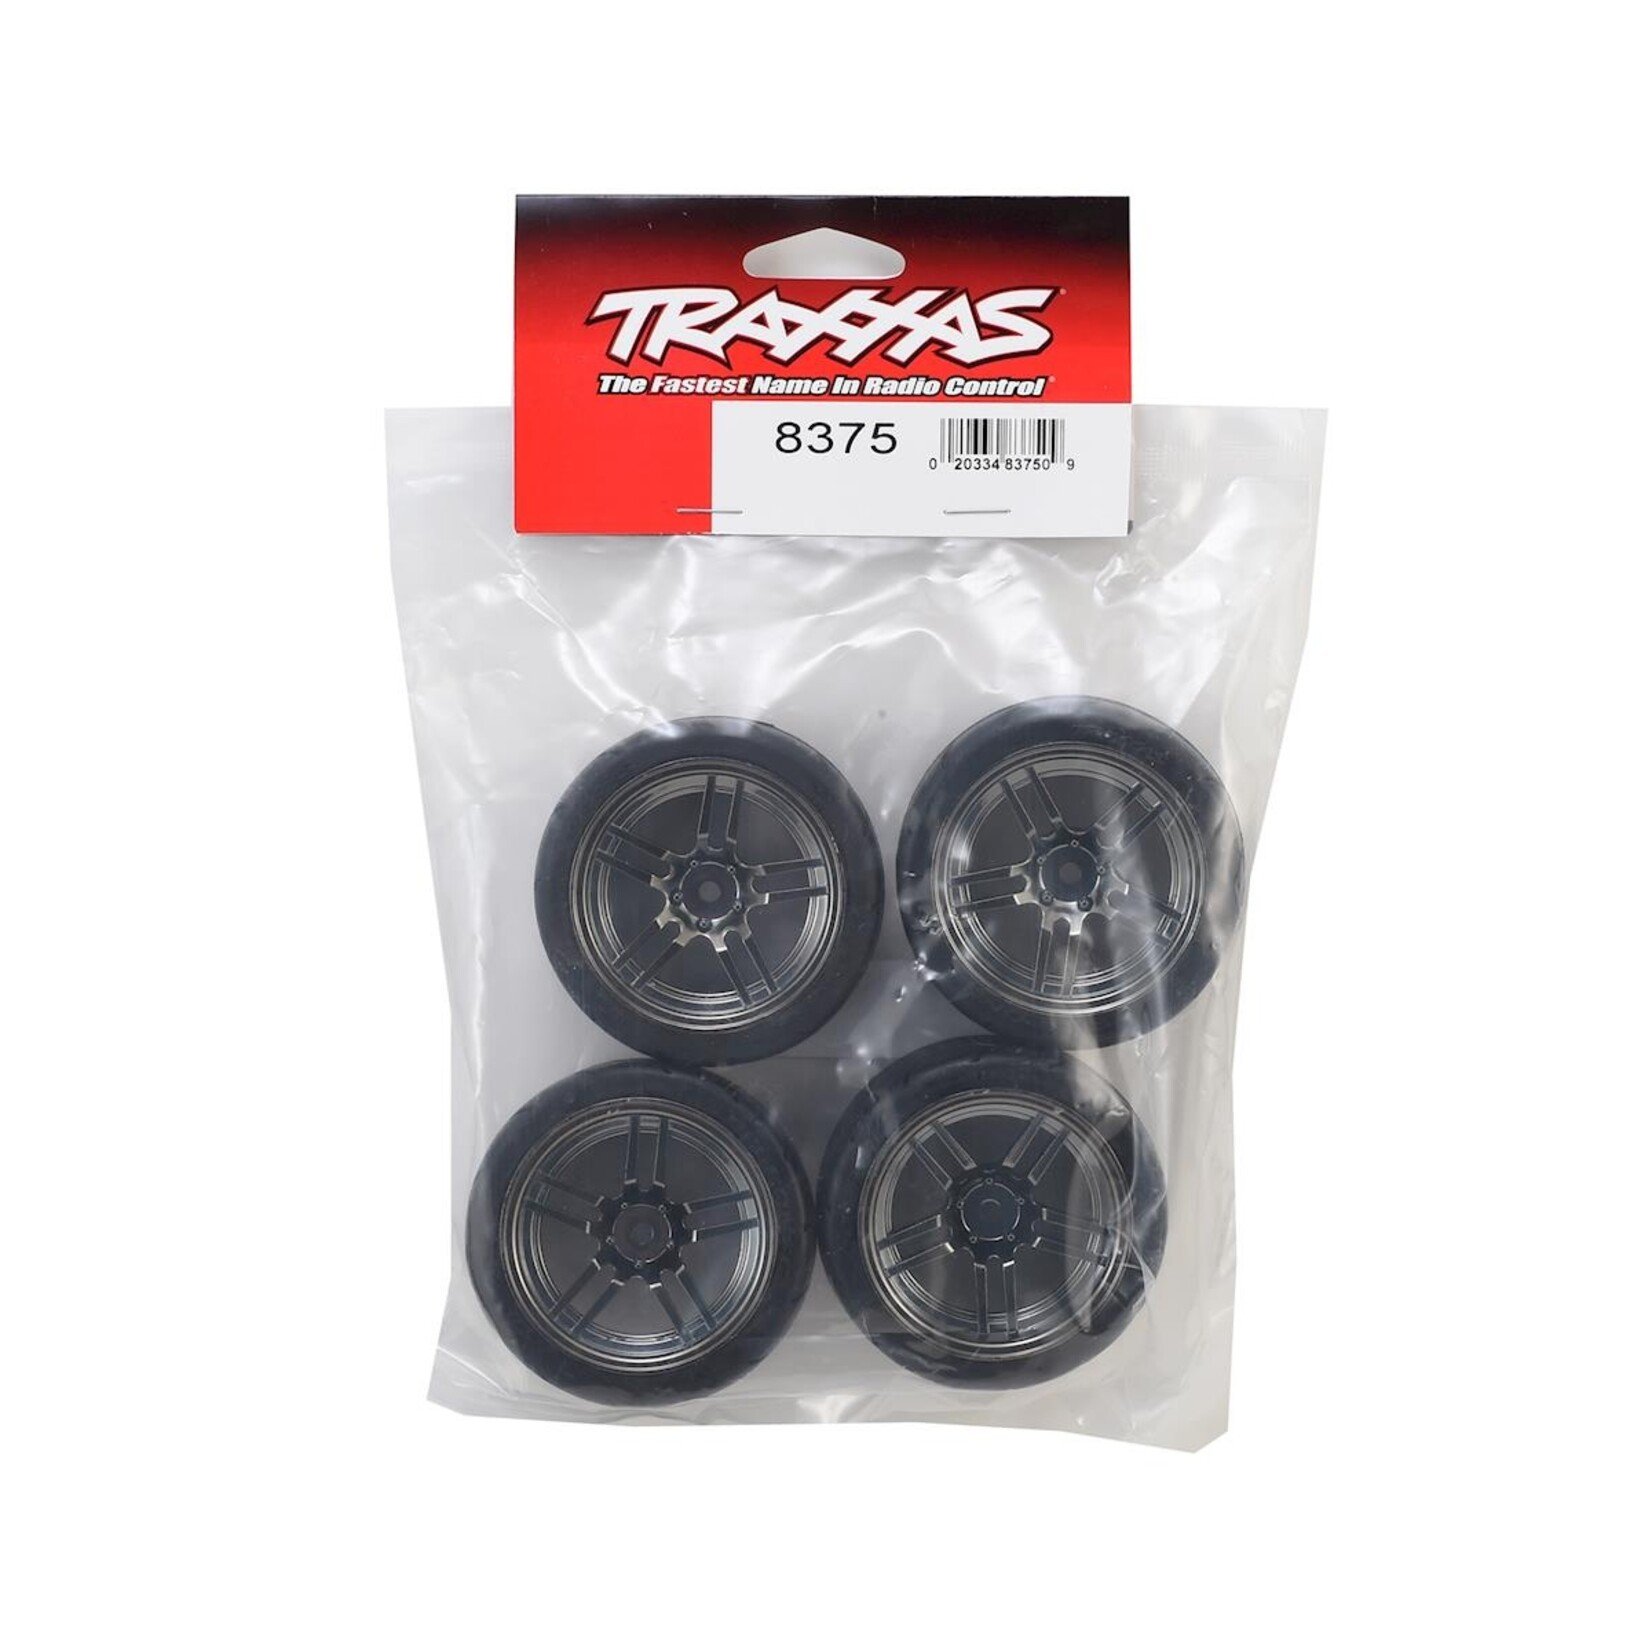 Traxxas Traxxas 4-Tec 2.0 1.9" Response Front & Rear Pre-Mounted Tires (Black Chrome) w/12mm Hex Split-Spoke Wheels (4) #8375